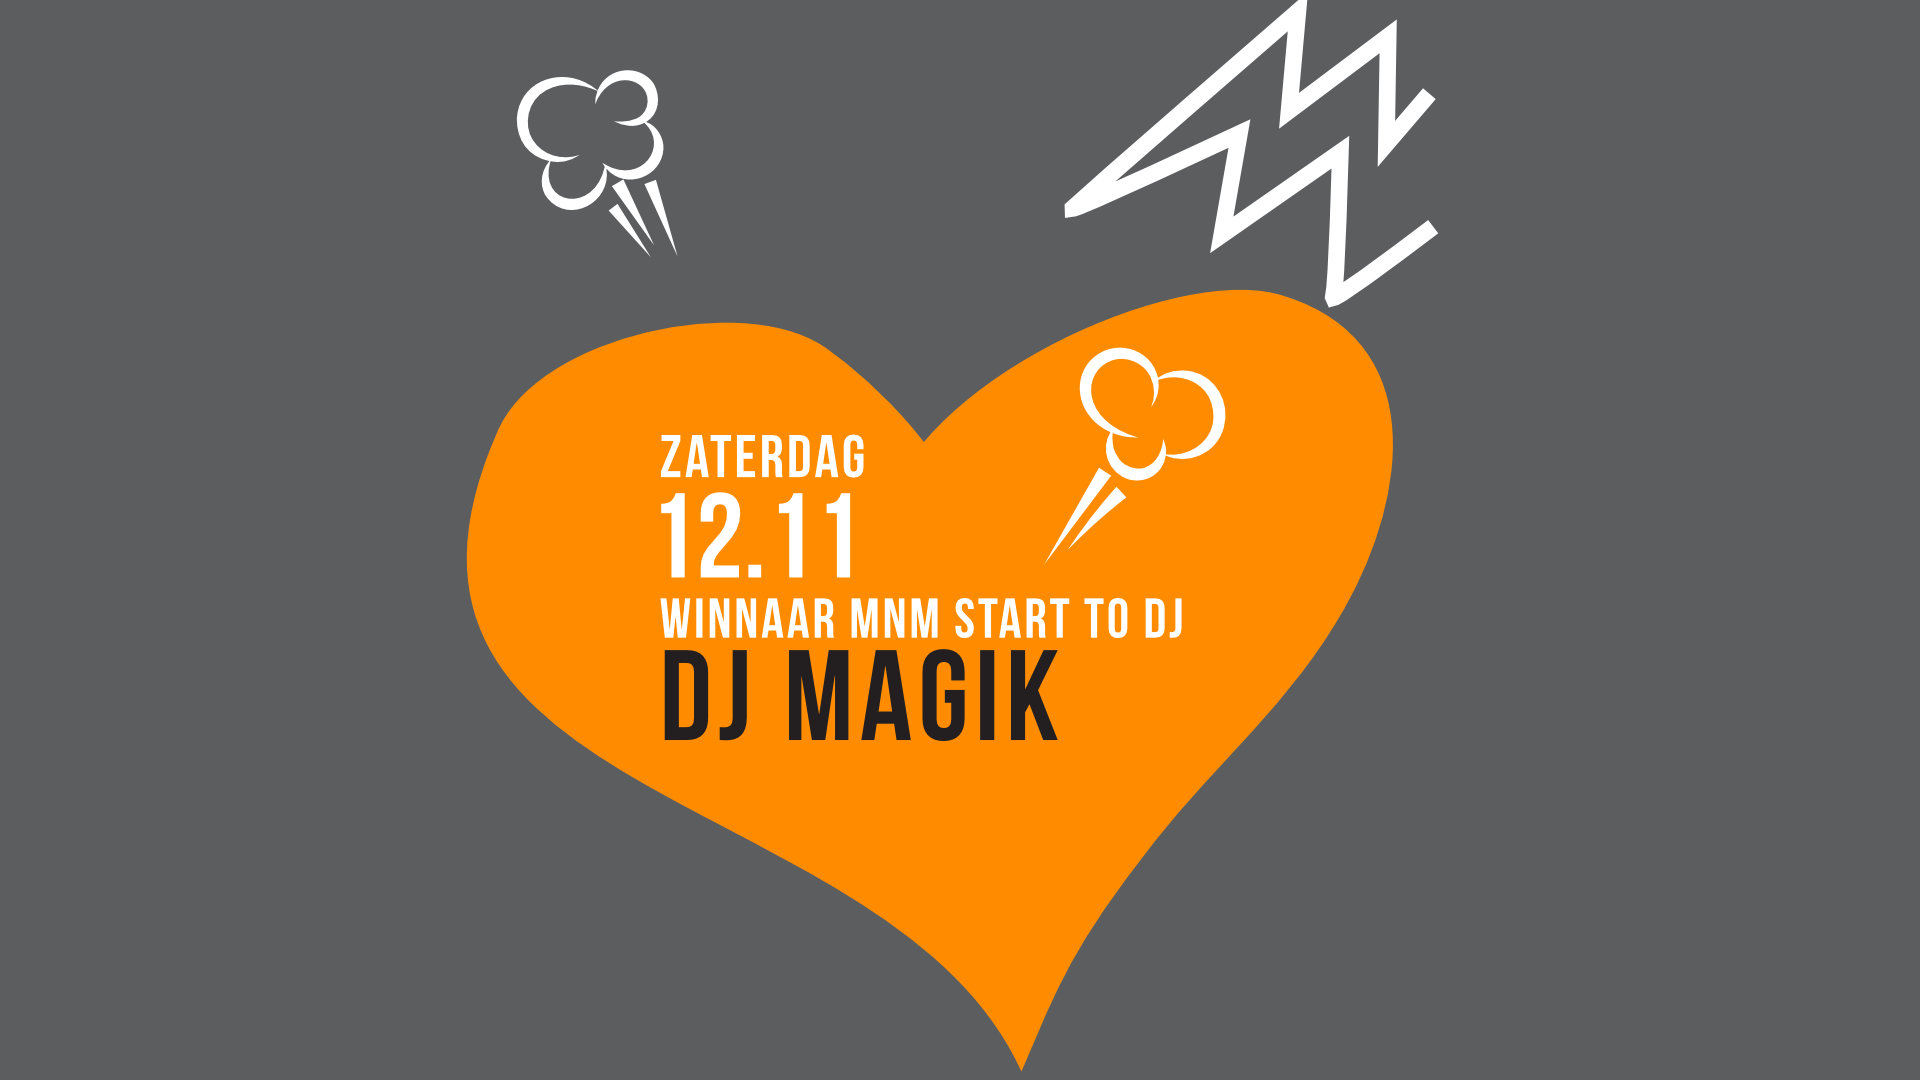 The Possé event DJ Magik